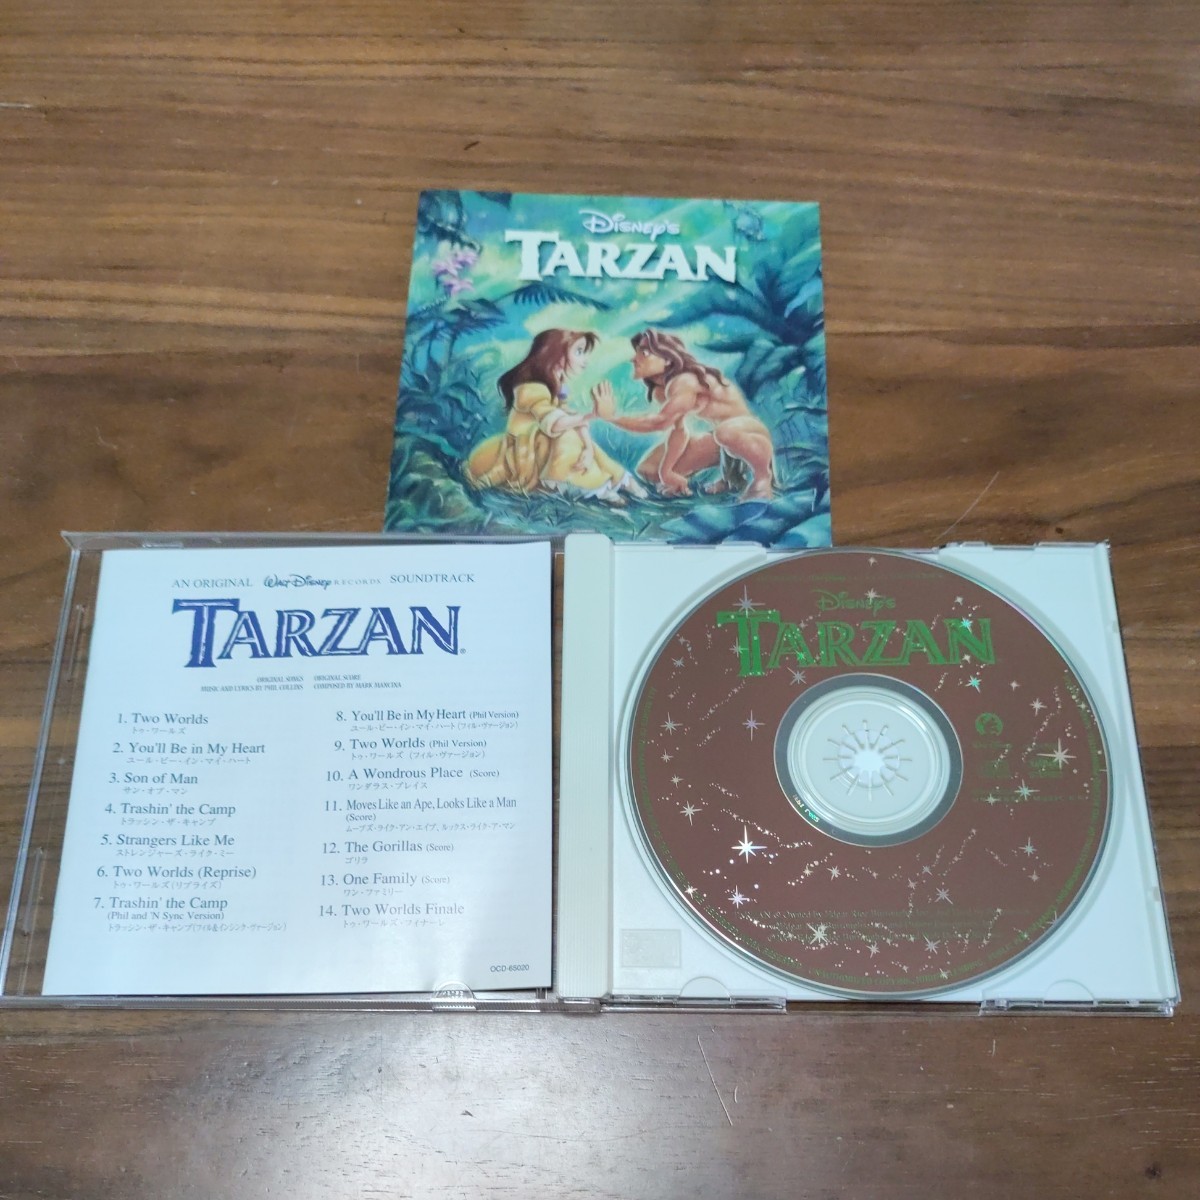 CD Tarzan woruto* Disney саундтрек ..* перевод имеется OCD-65020